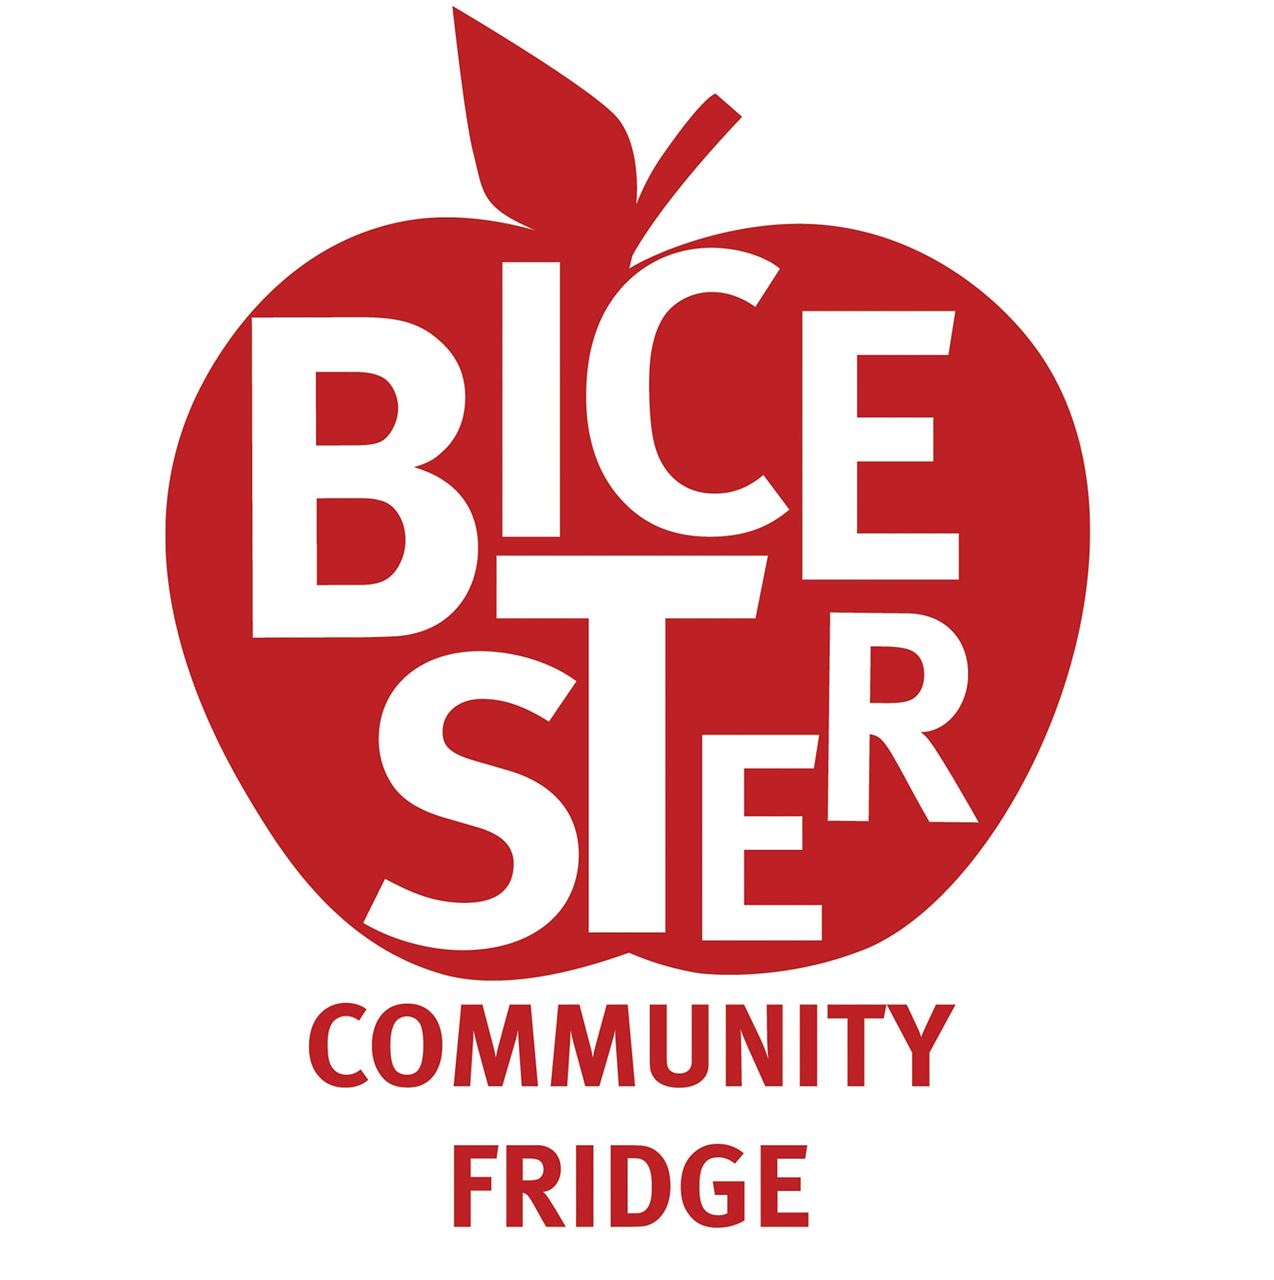 bicester community fridge